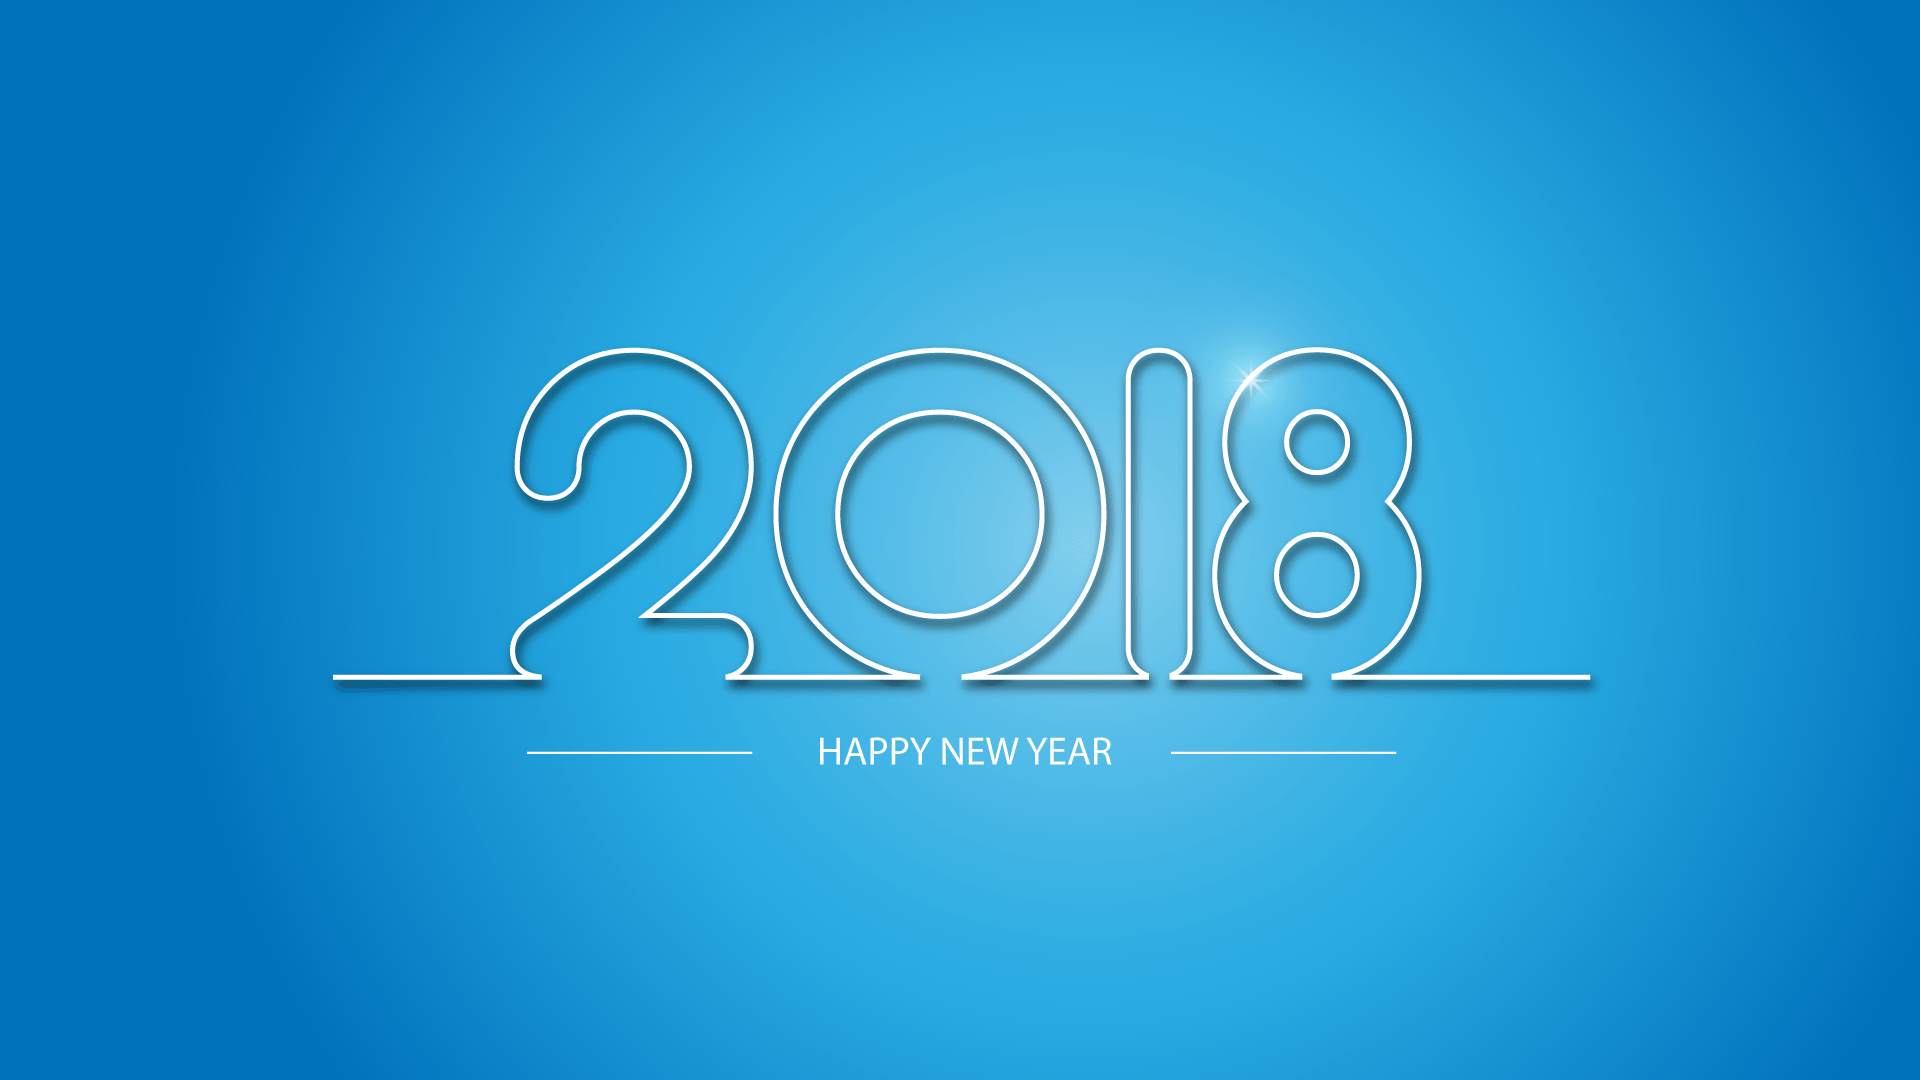 2018 Wallpaper - Happy New Year 2018 Blue Background - HD Wallpaper 